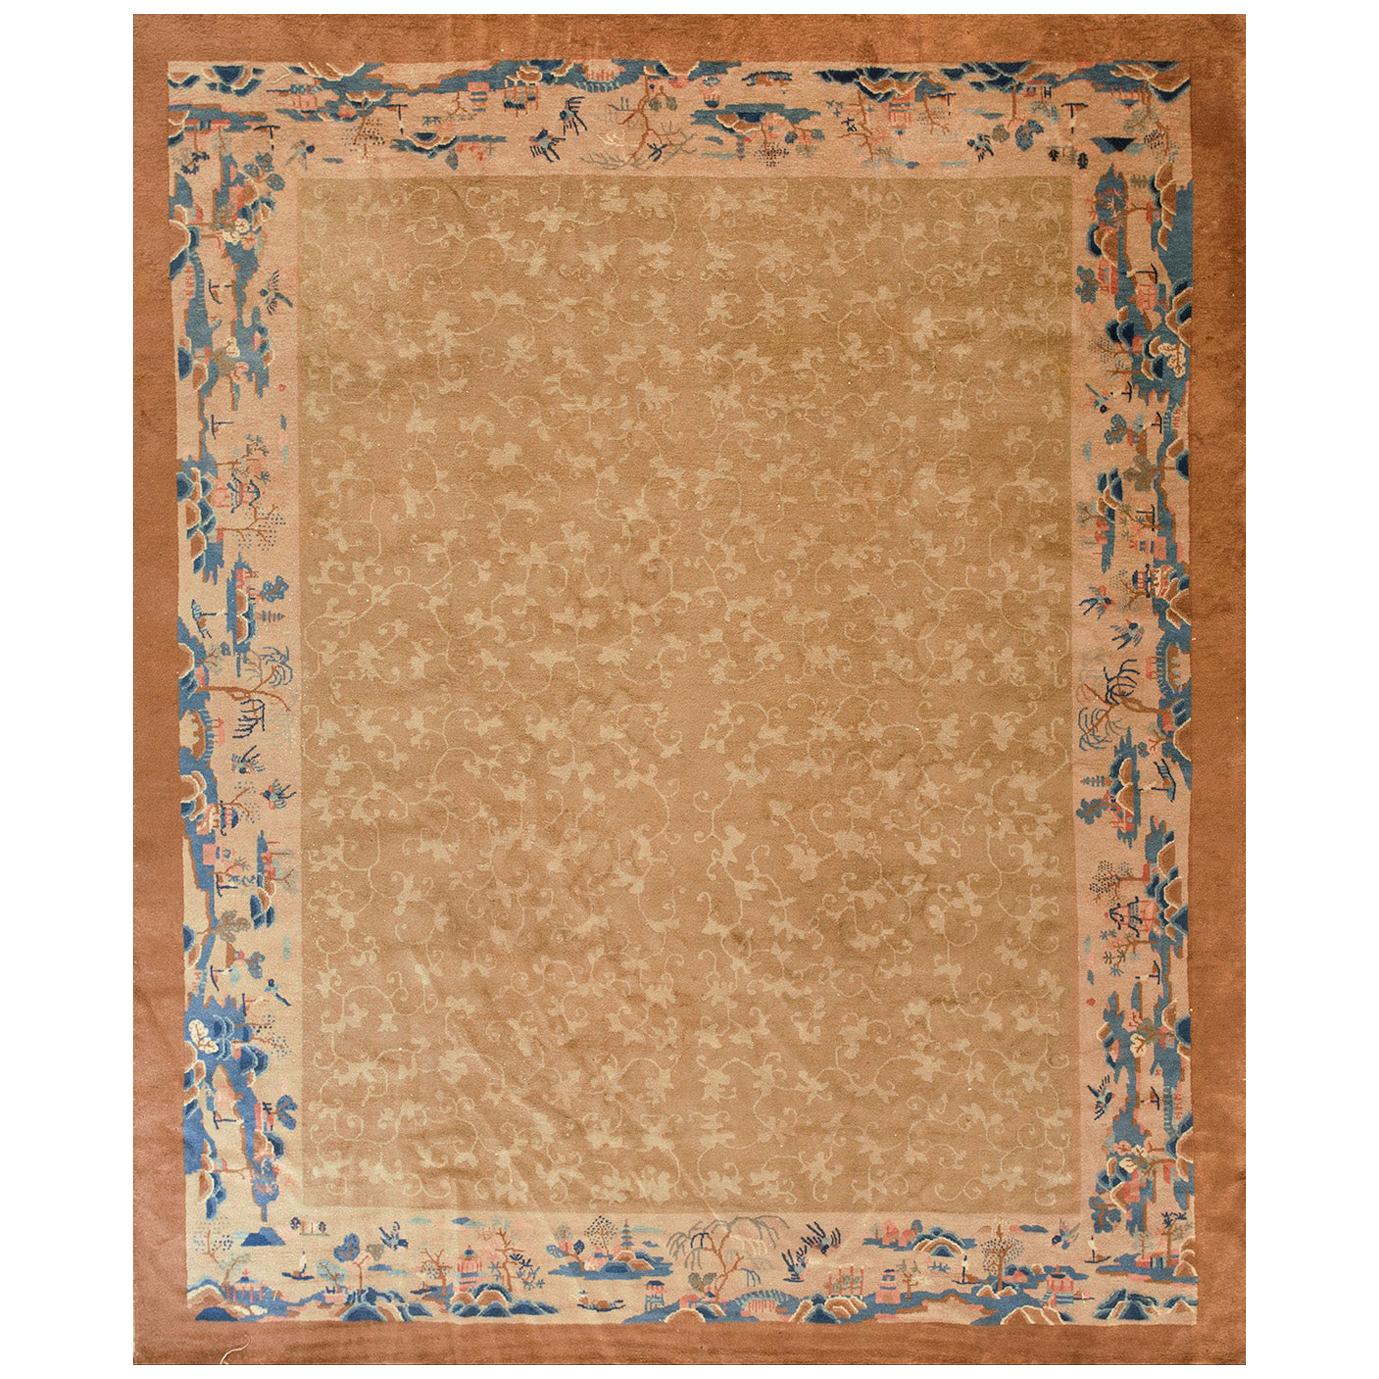 Early 20th Century Chinese Peking Carpet ( 8' x 9'10" - 245 x 300 )